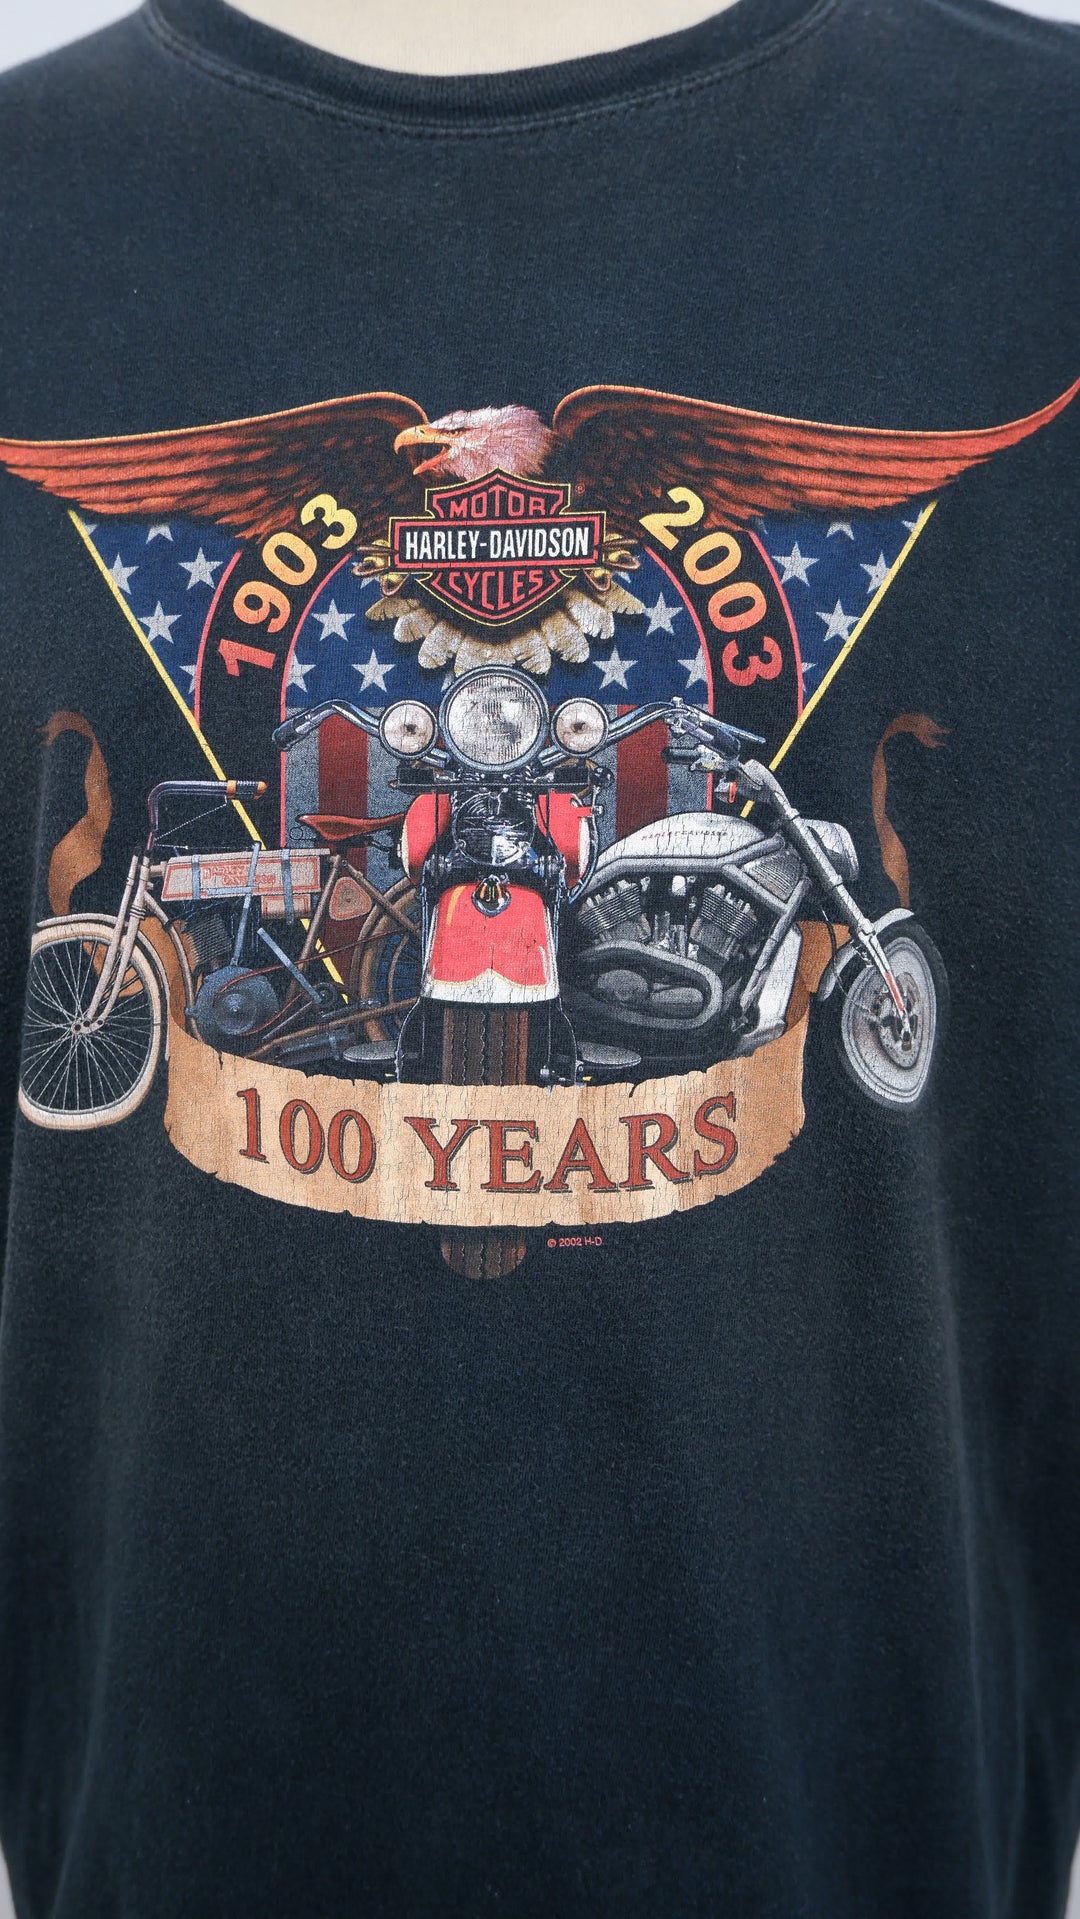 Harley Davidson J & E Greenville NC Vintage T-Shirt Made In USA